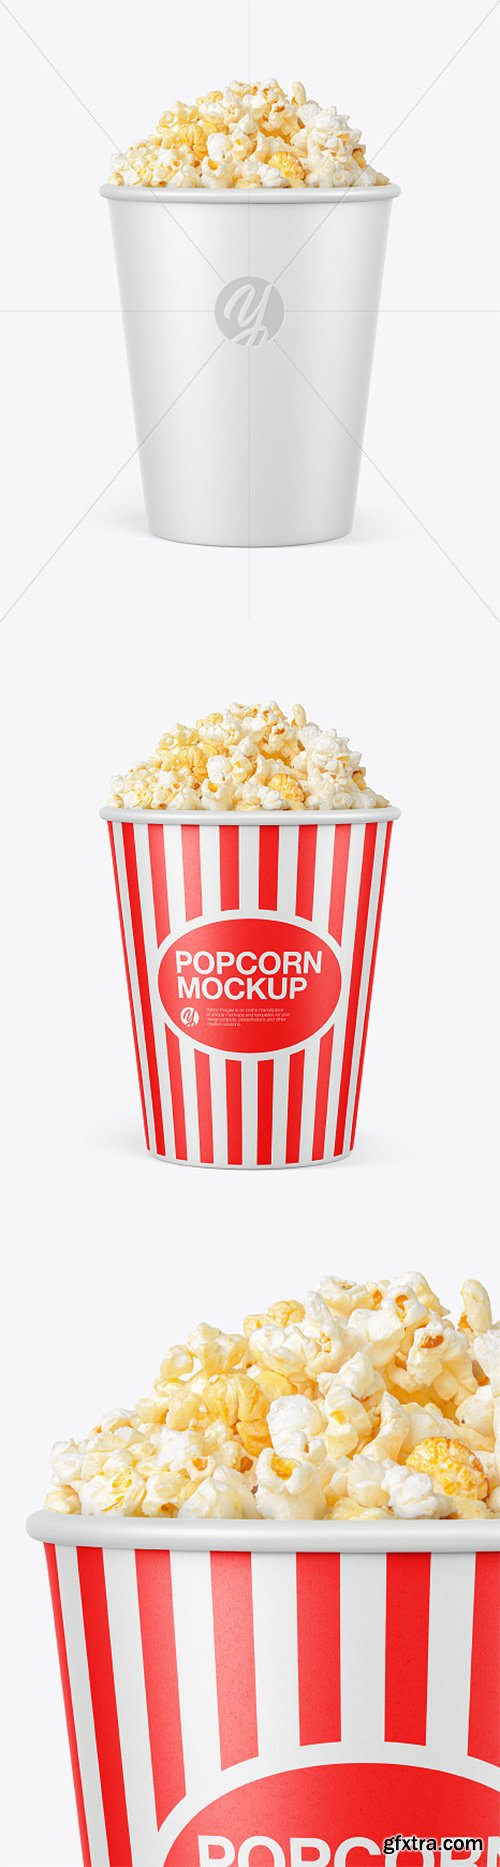 Cup Popcorn Mockup 66440